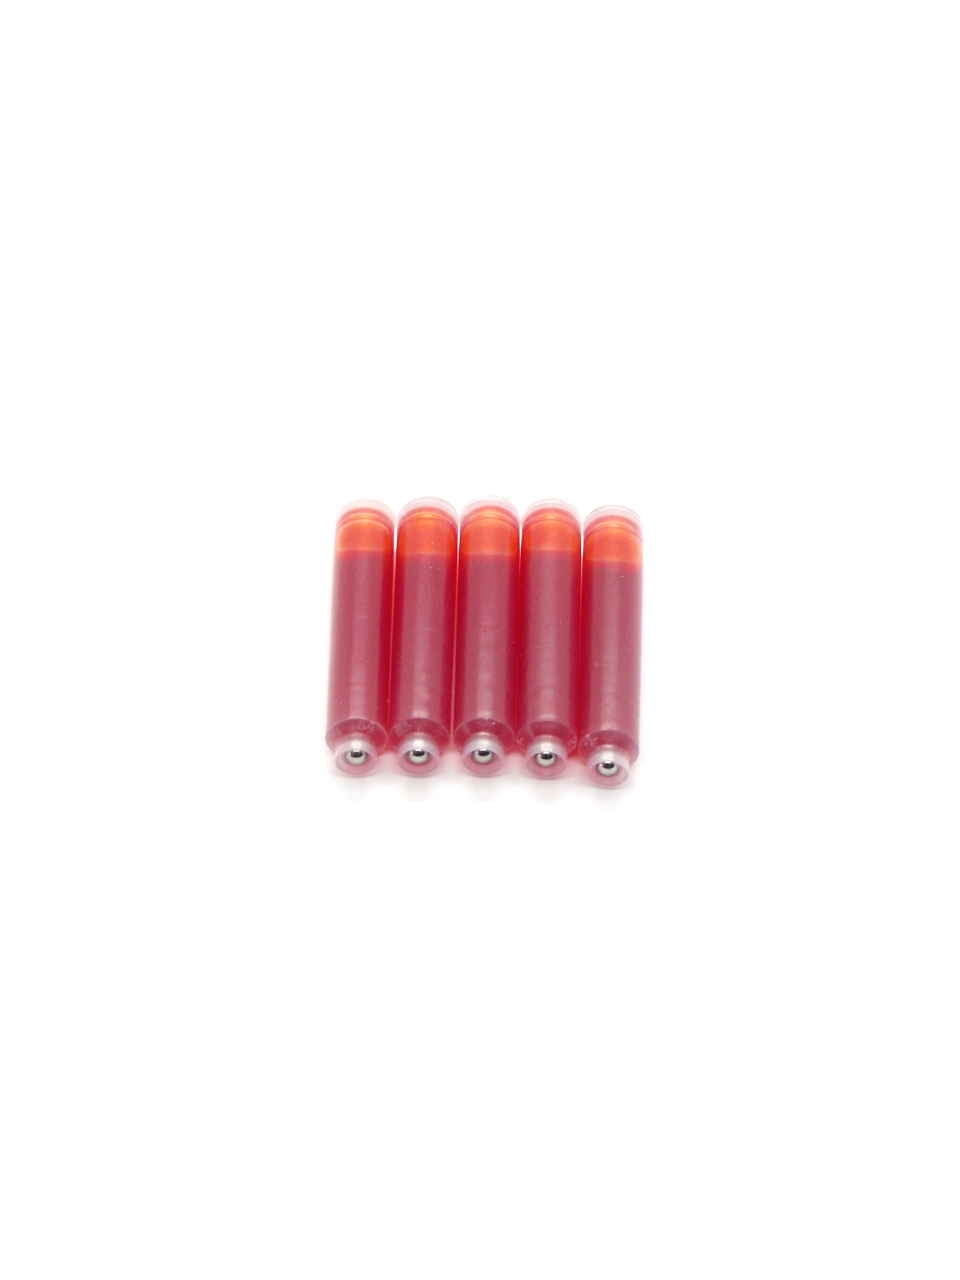 Top Ink Cartridges For Ducati Fountain Pens (Orange)